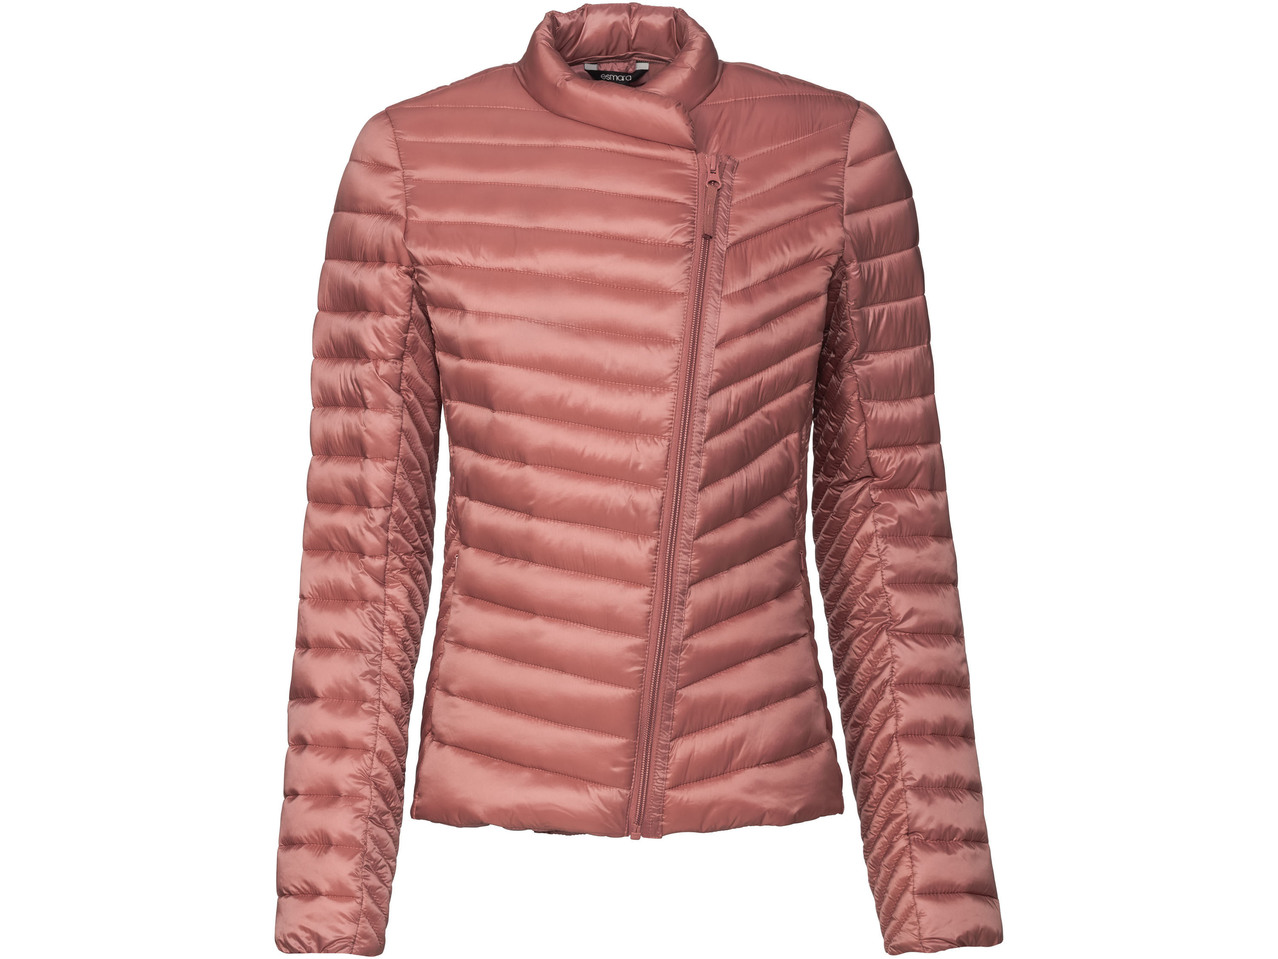 Ladies' Lightweight Thermal Jacket